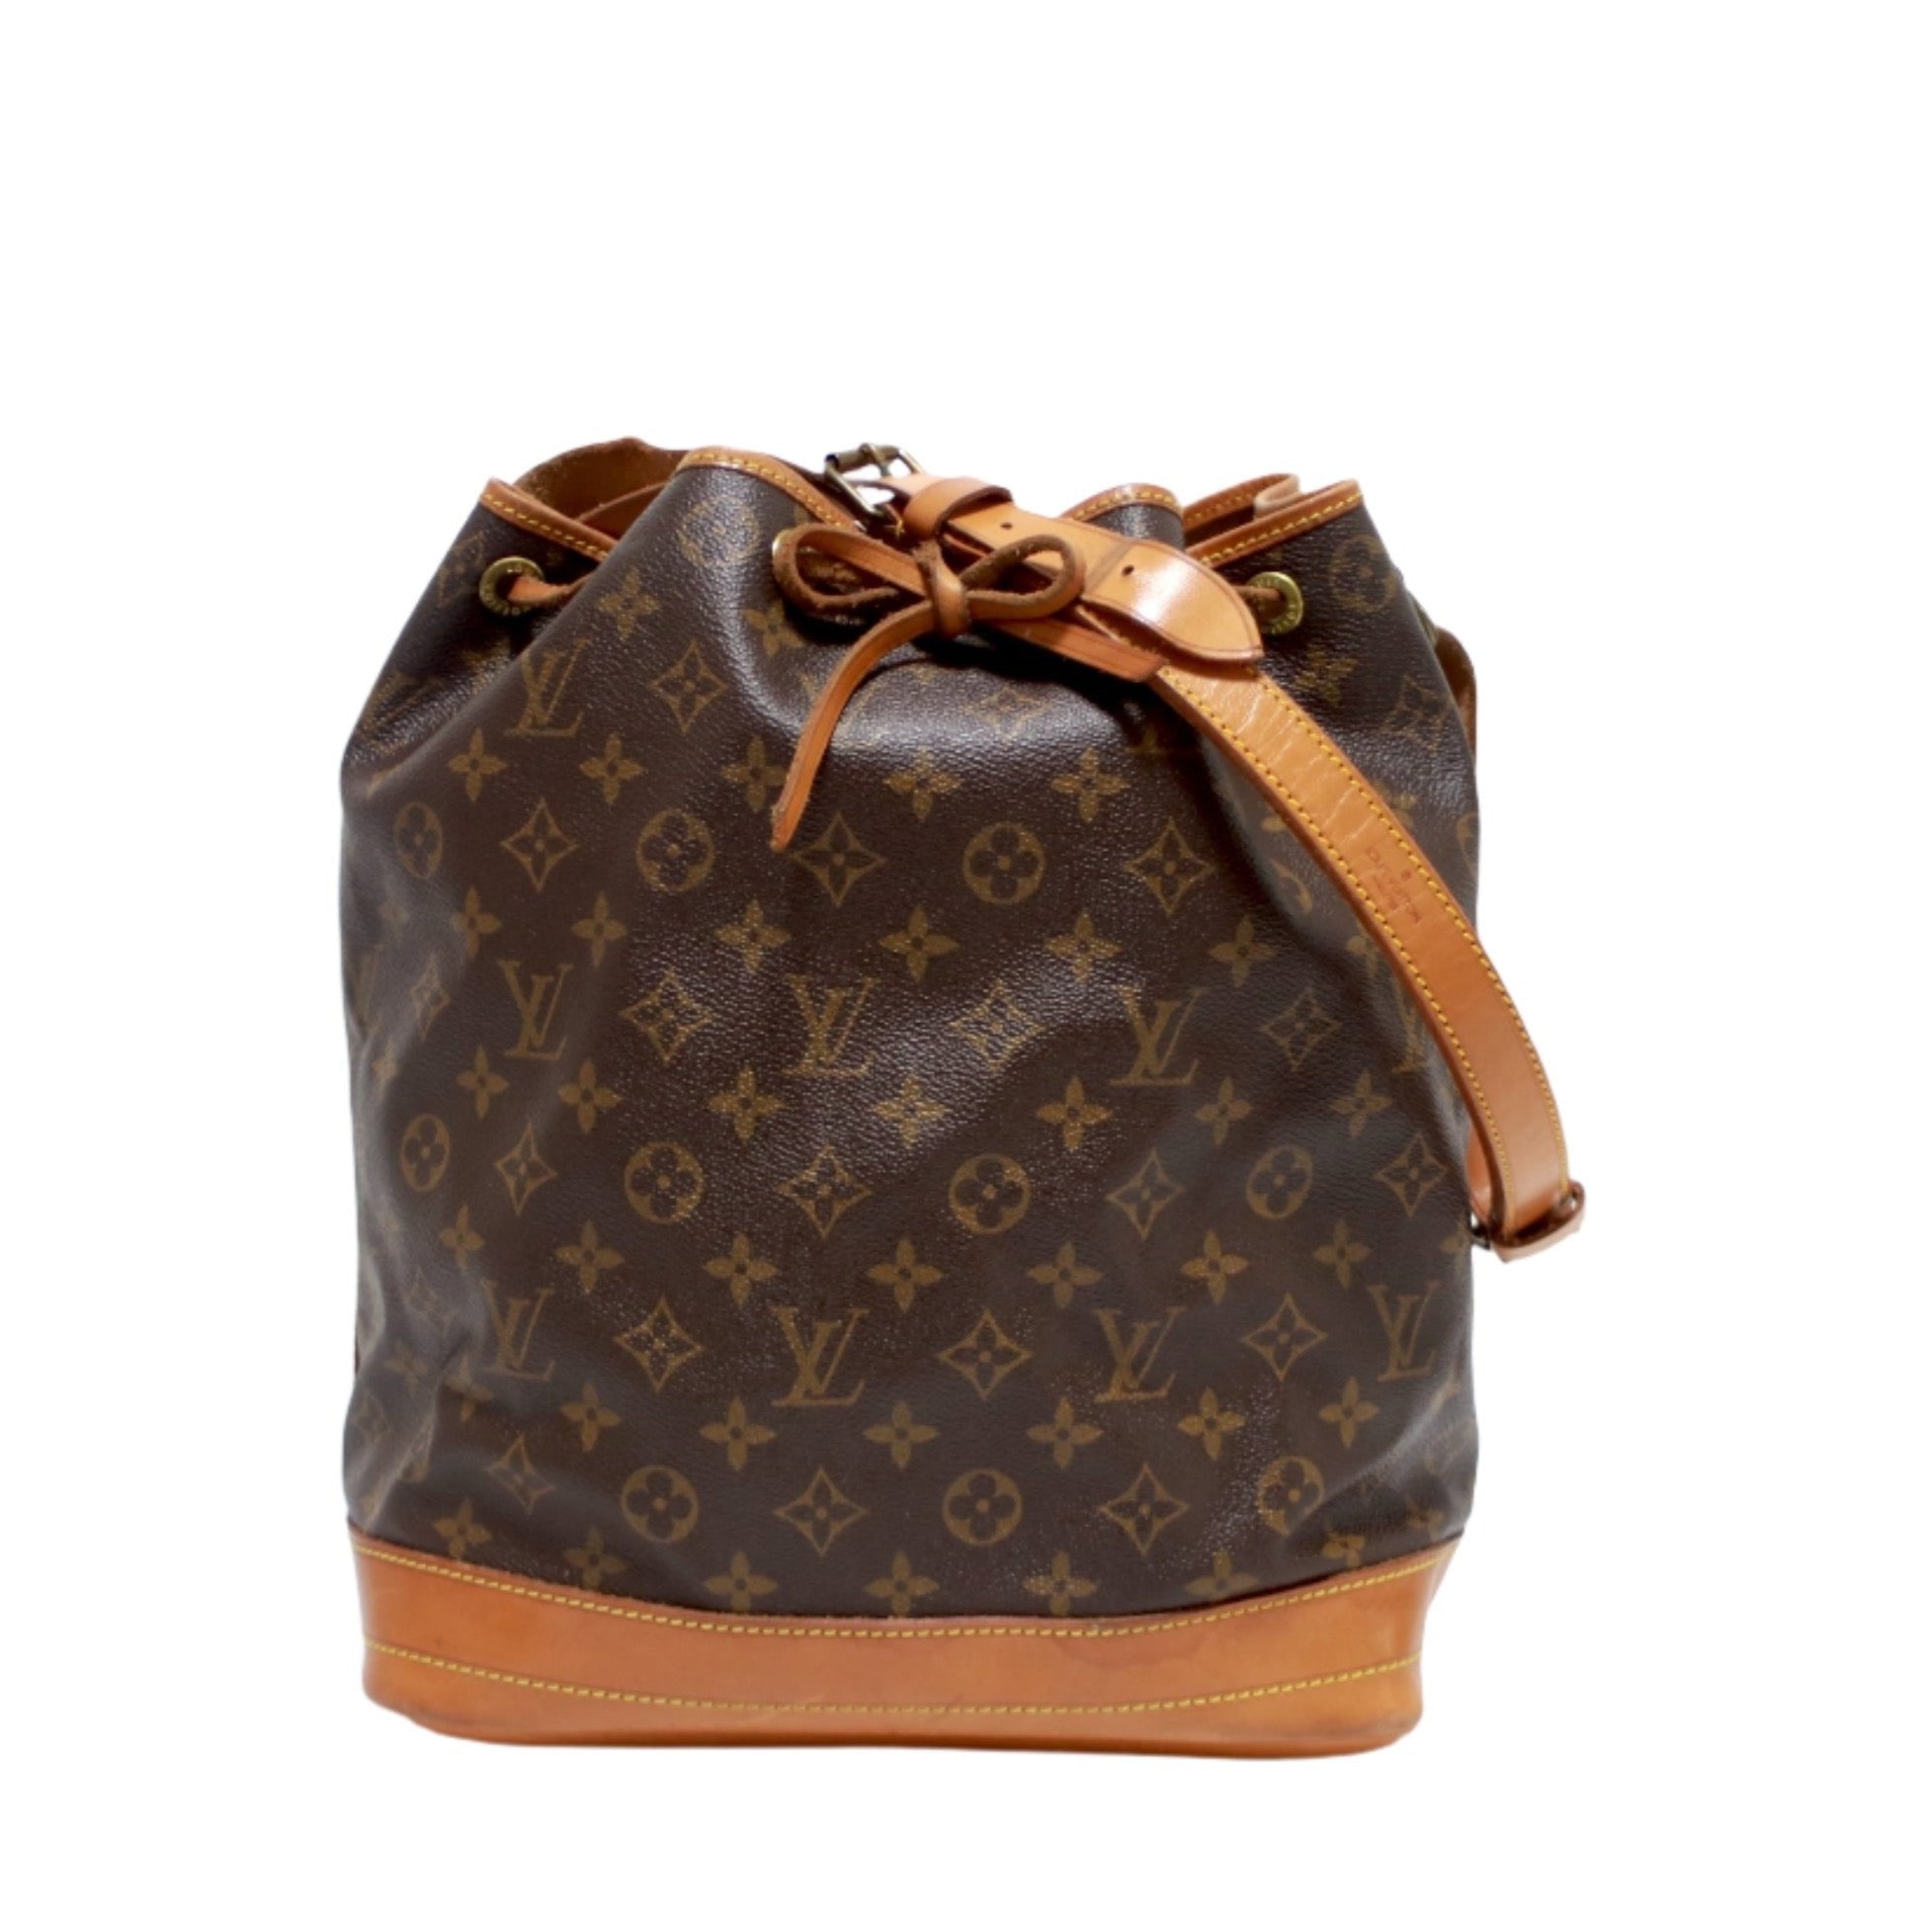 Louis Vuitton Noe GM Bucket Shoulder Bag Used (8481)